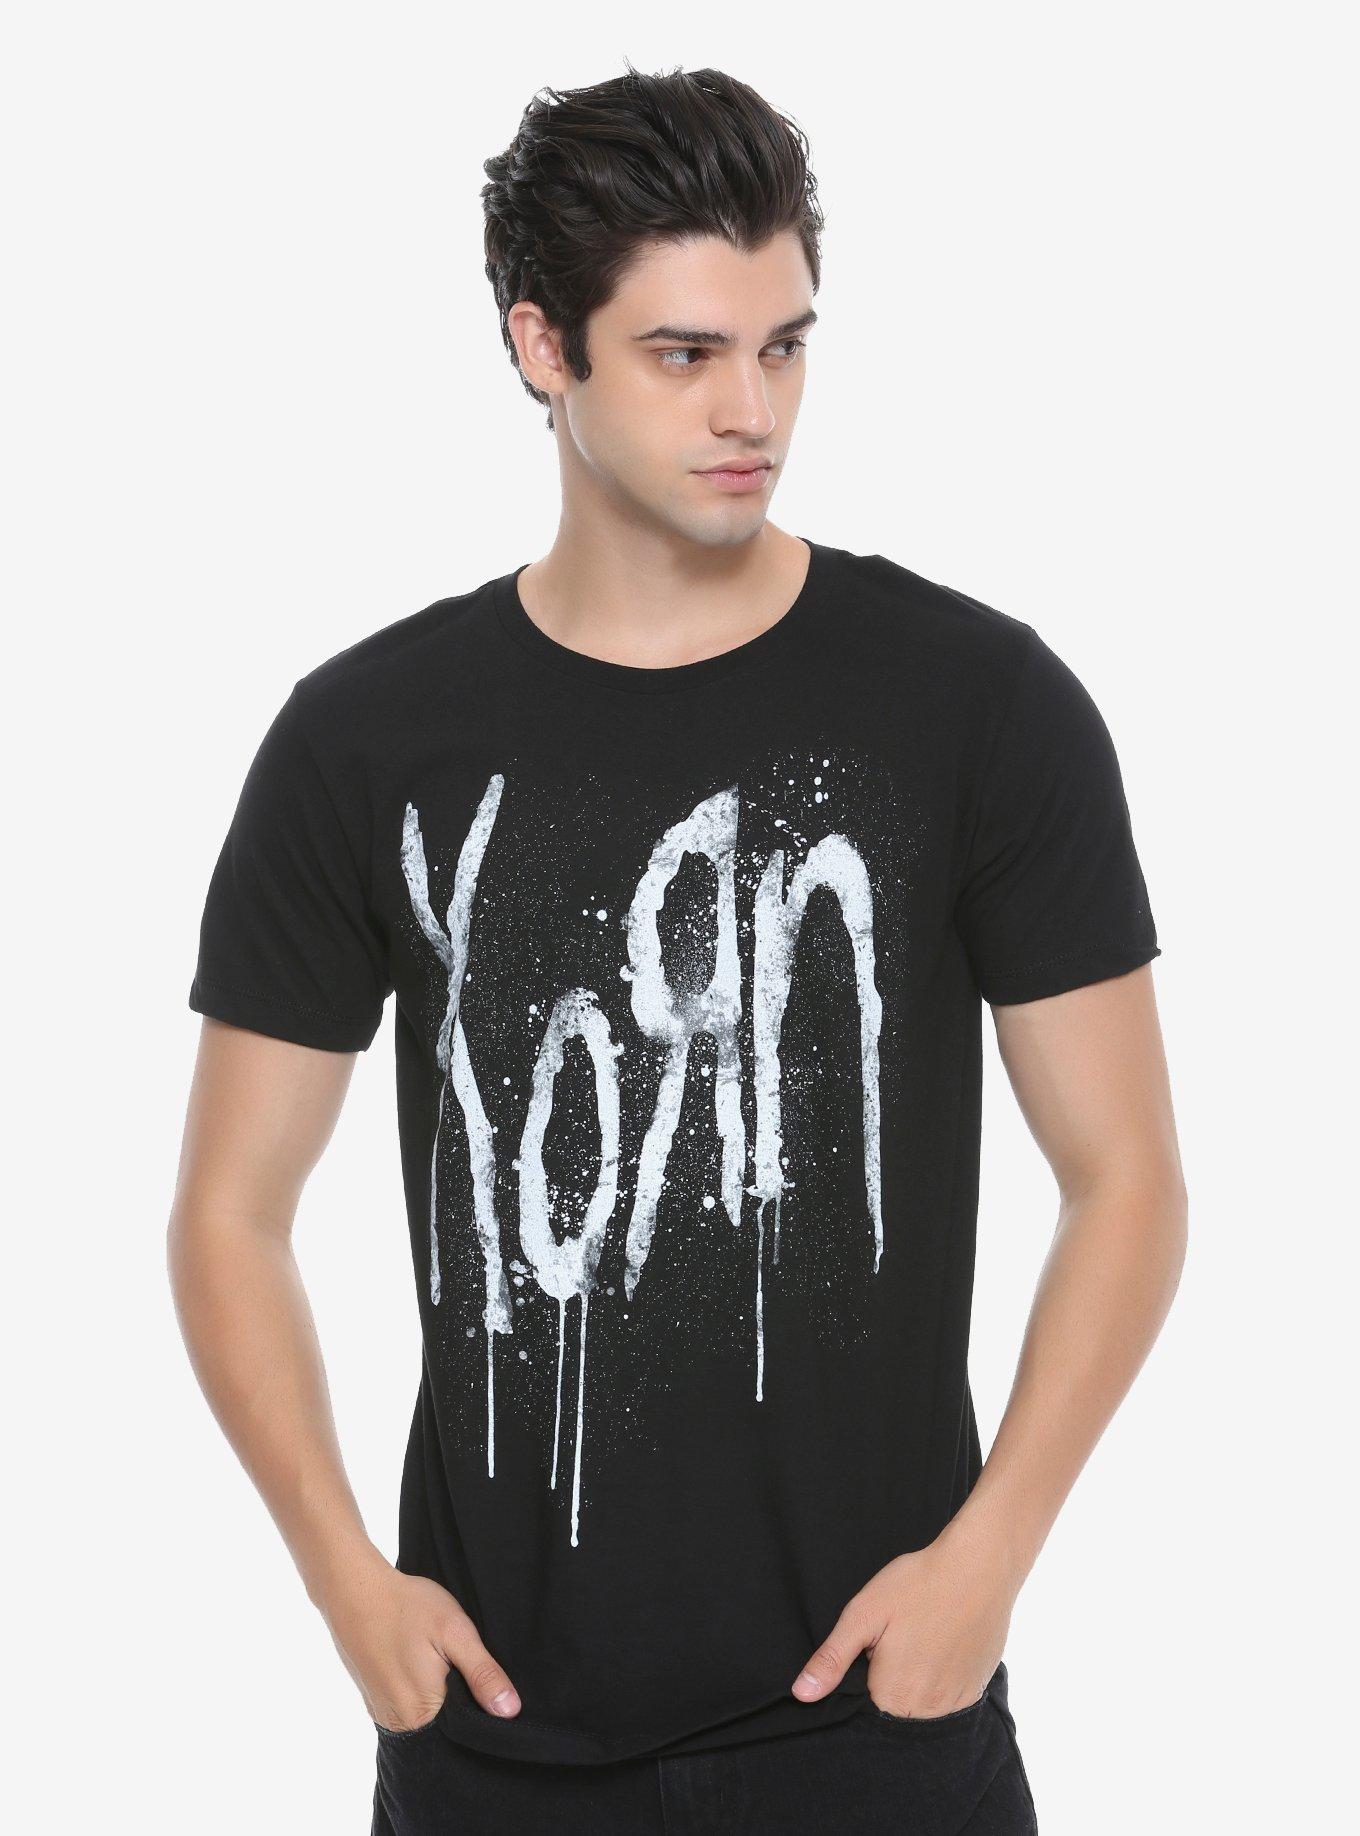 Korn Still A Freak T-Shirt, BLACK, alternate